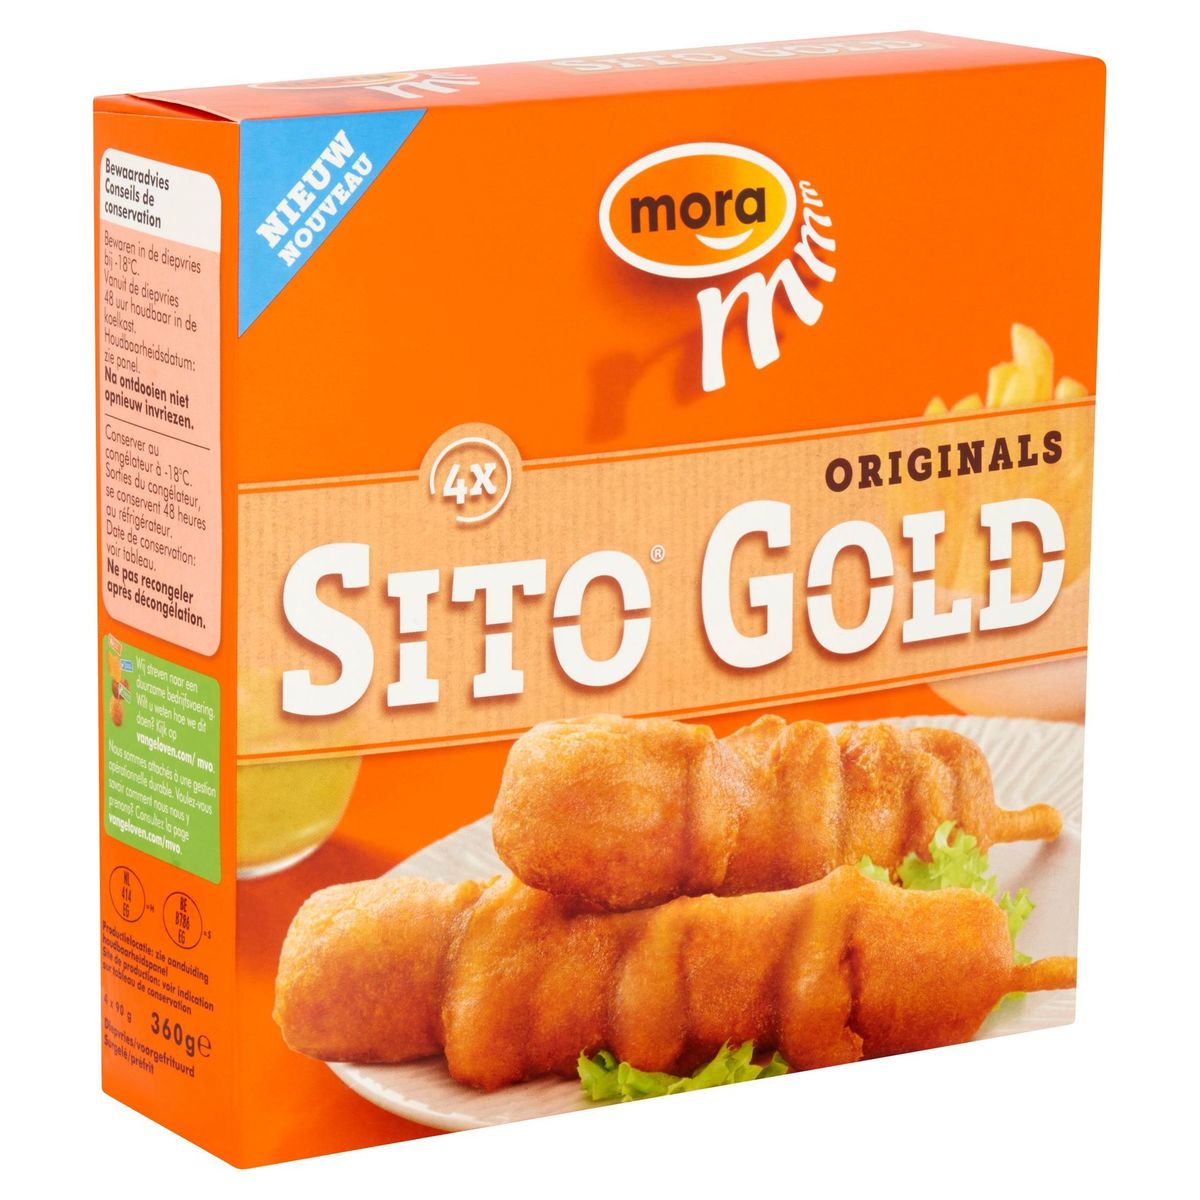 Mora Originals Sito Gold 4 x 90 g